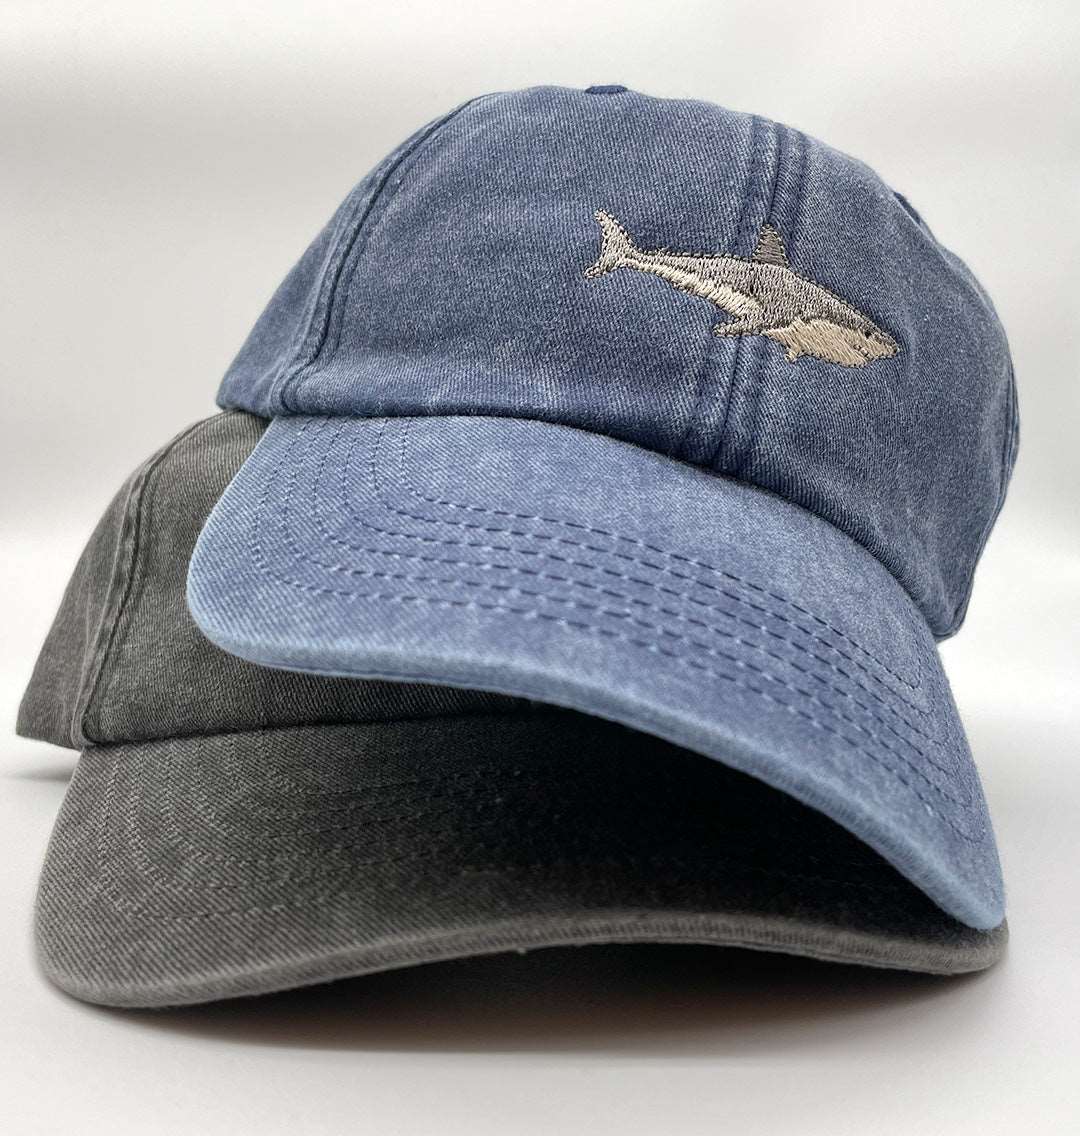 Great White Shark Baseball Cap - Sea Life Conservation Hat - UK, Vintage Denim